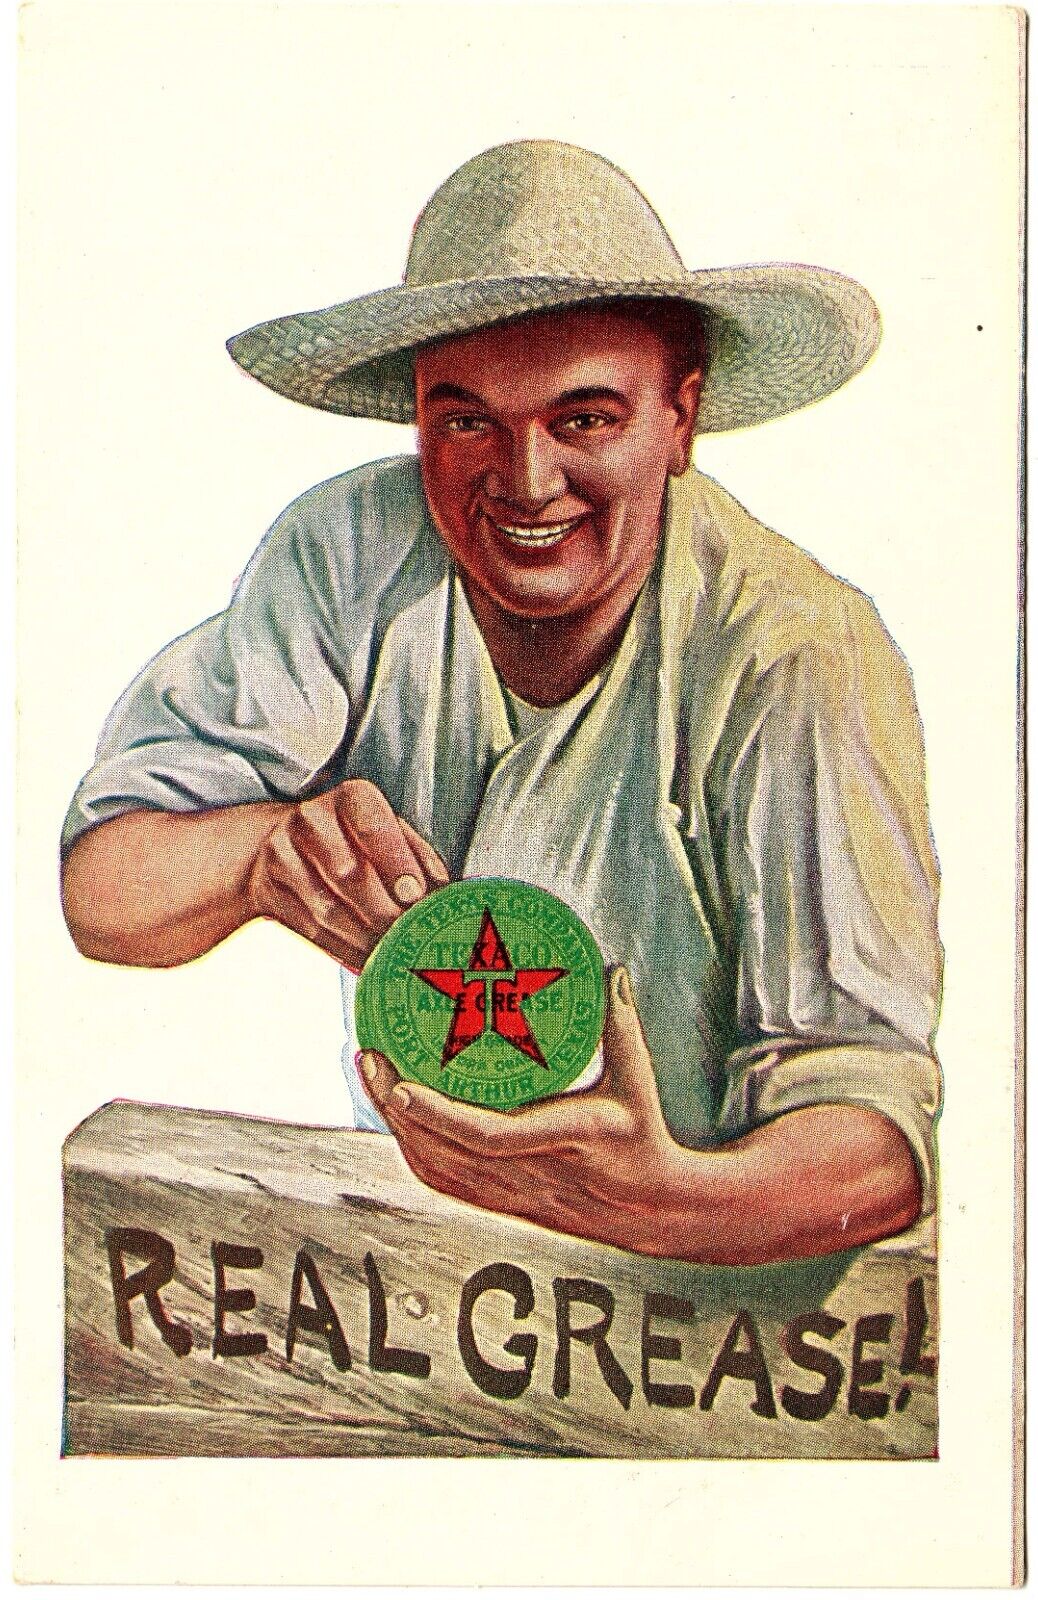 POSTCARD - Real Grease Man Texaco Trade Card Early 20th Century A-A-GR-282-15